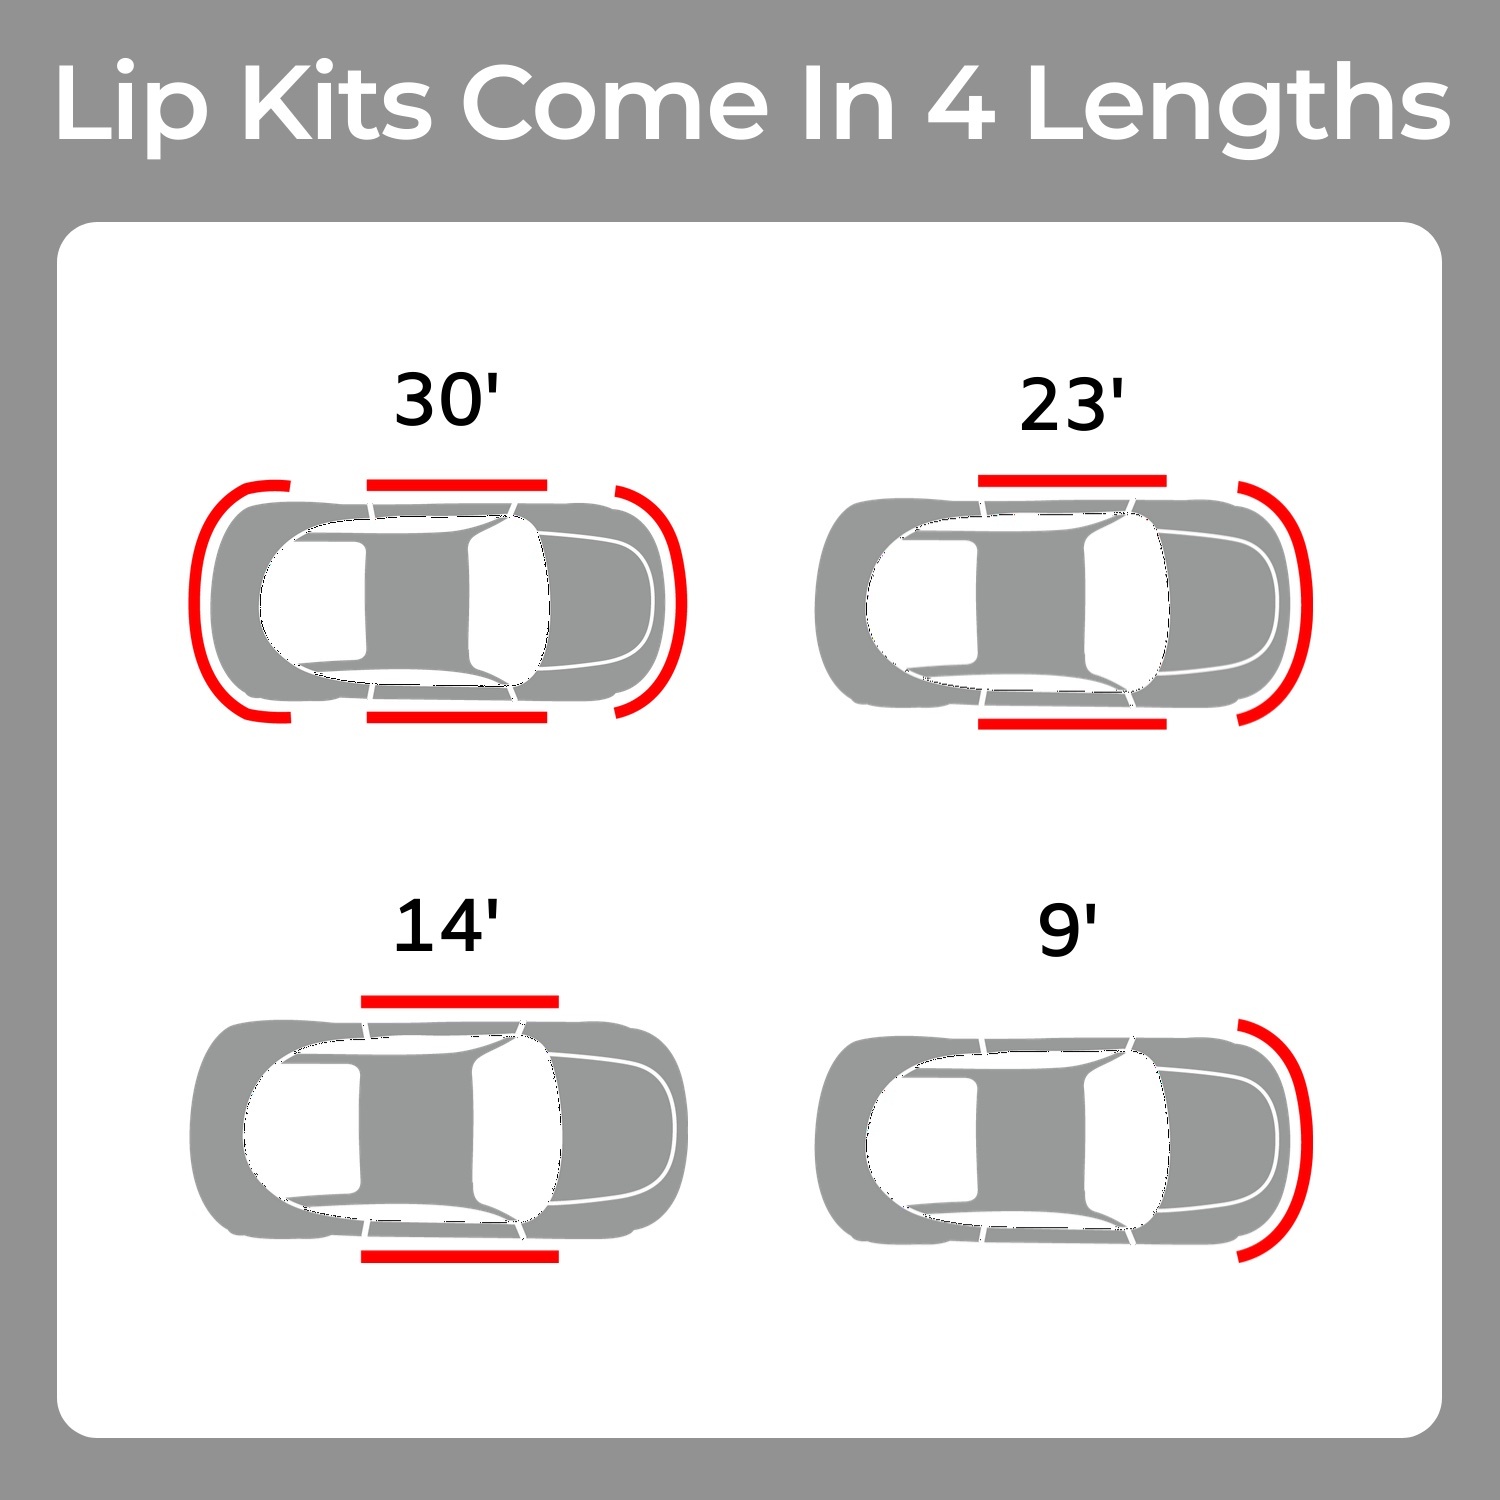 All-Fit Lip Kit - All-Fit Automotive